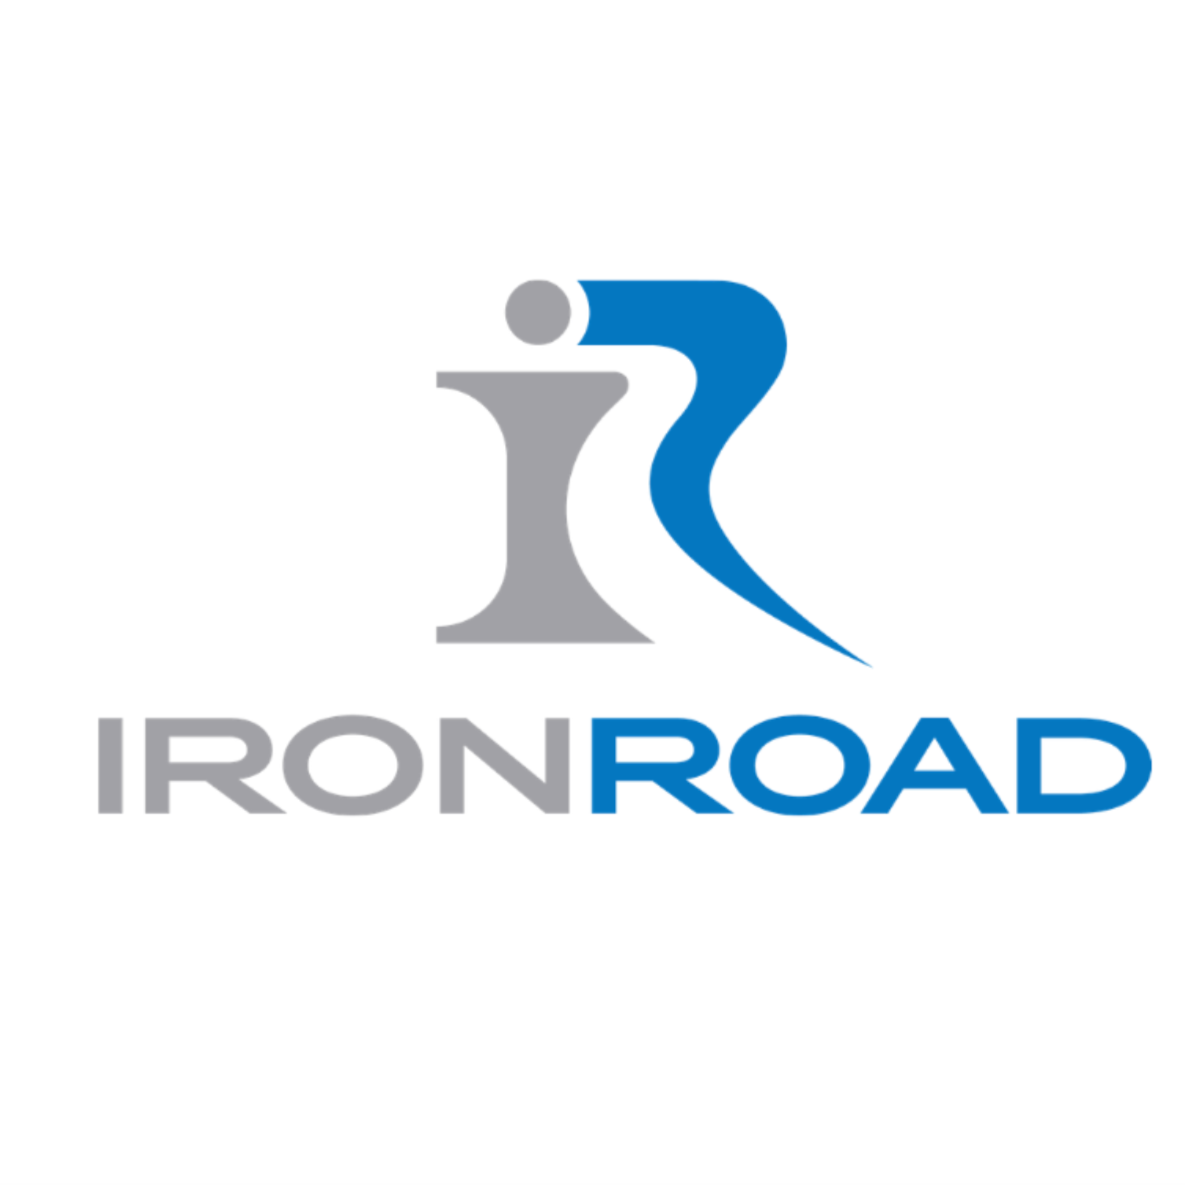 IronRoad